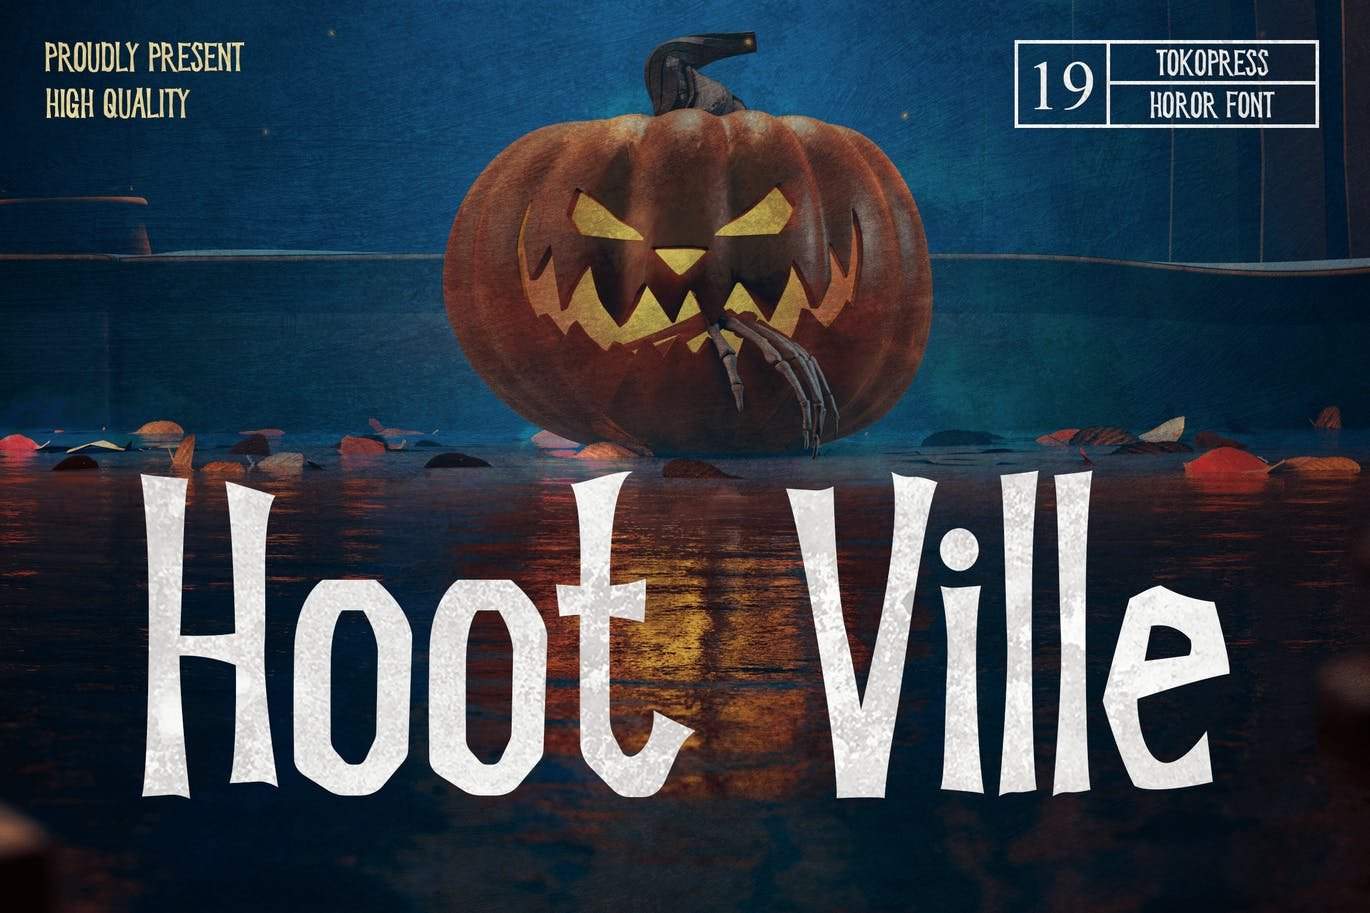 Hoot Ville – Spooky Font cover image.